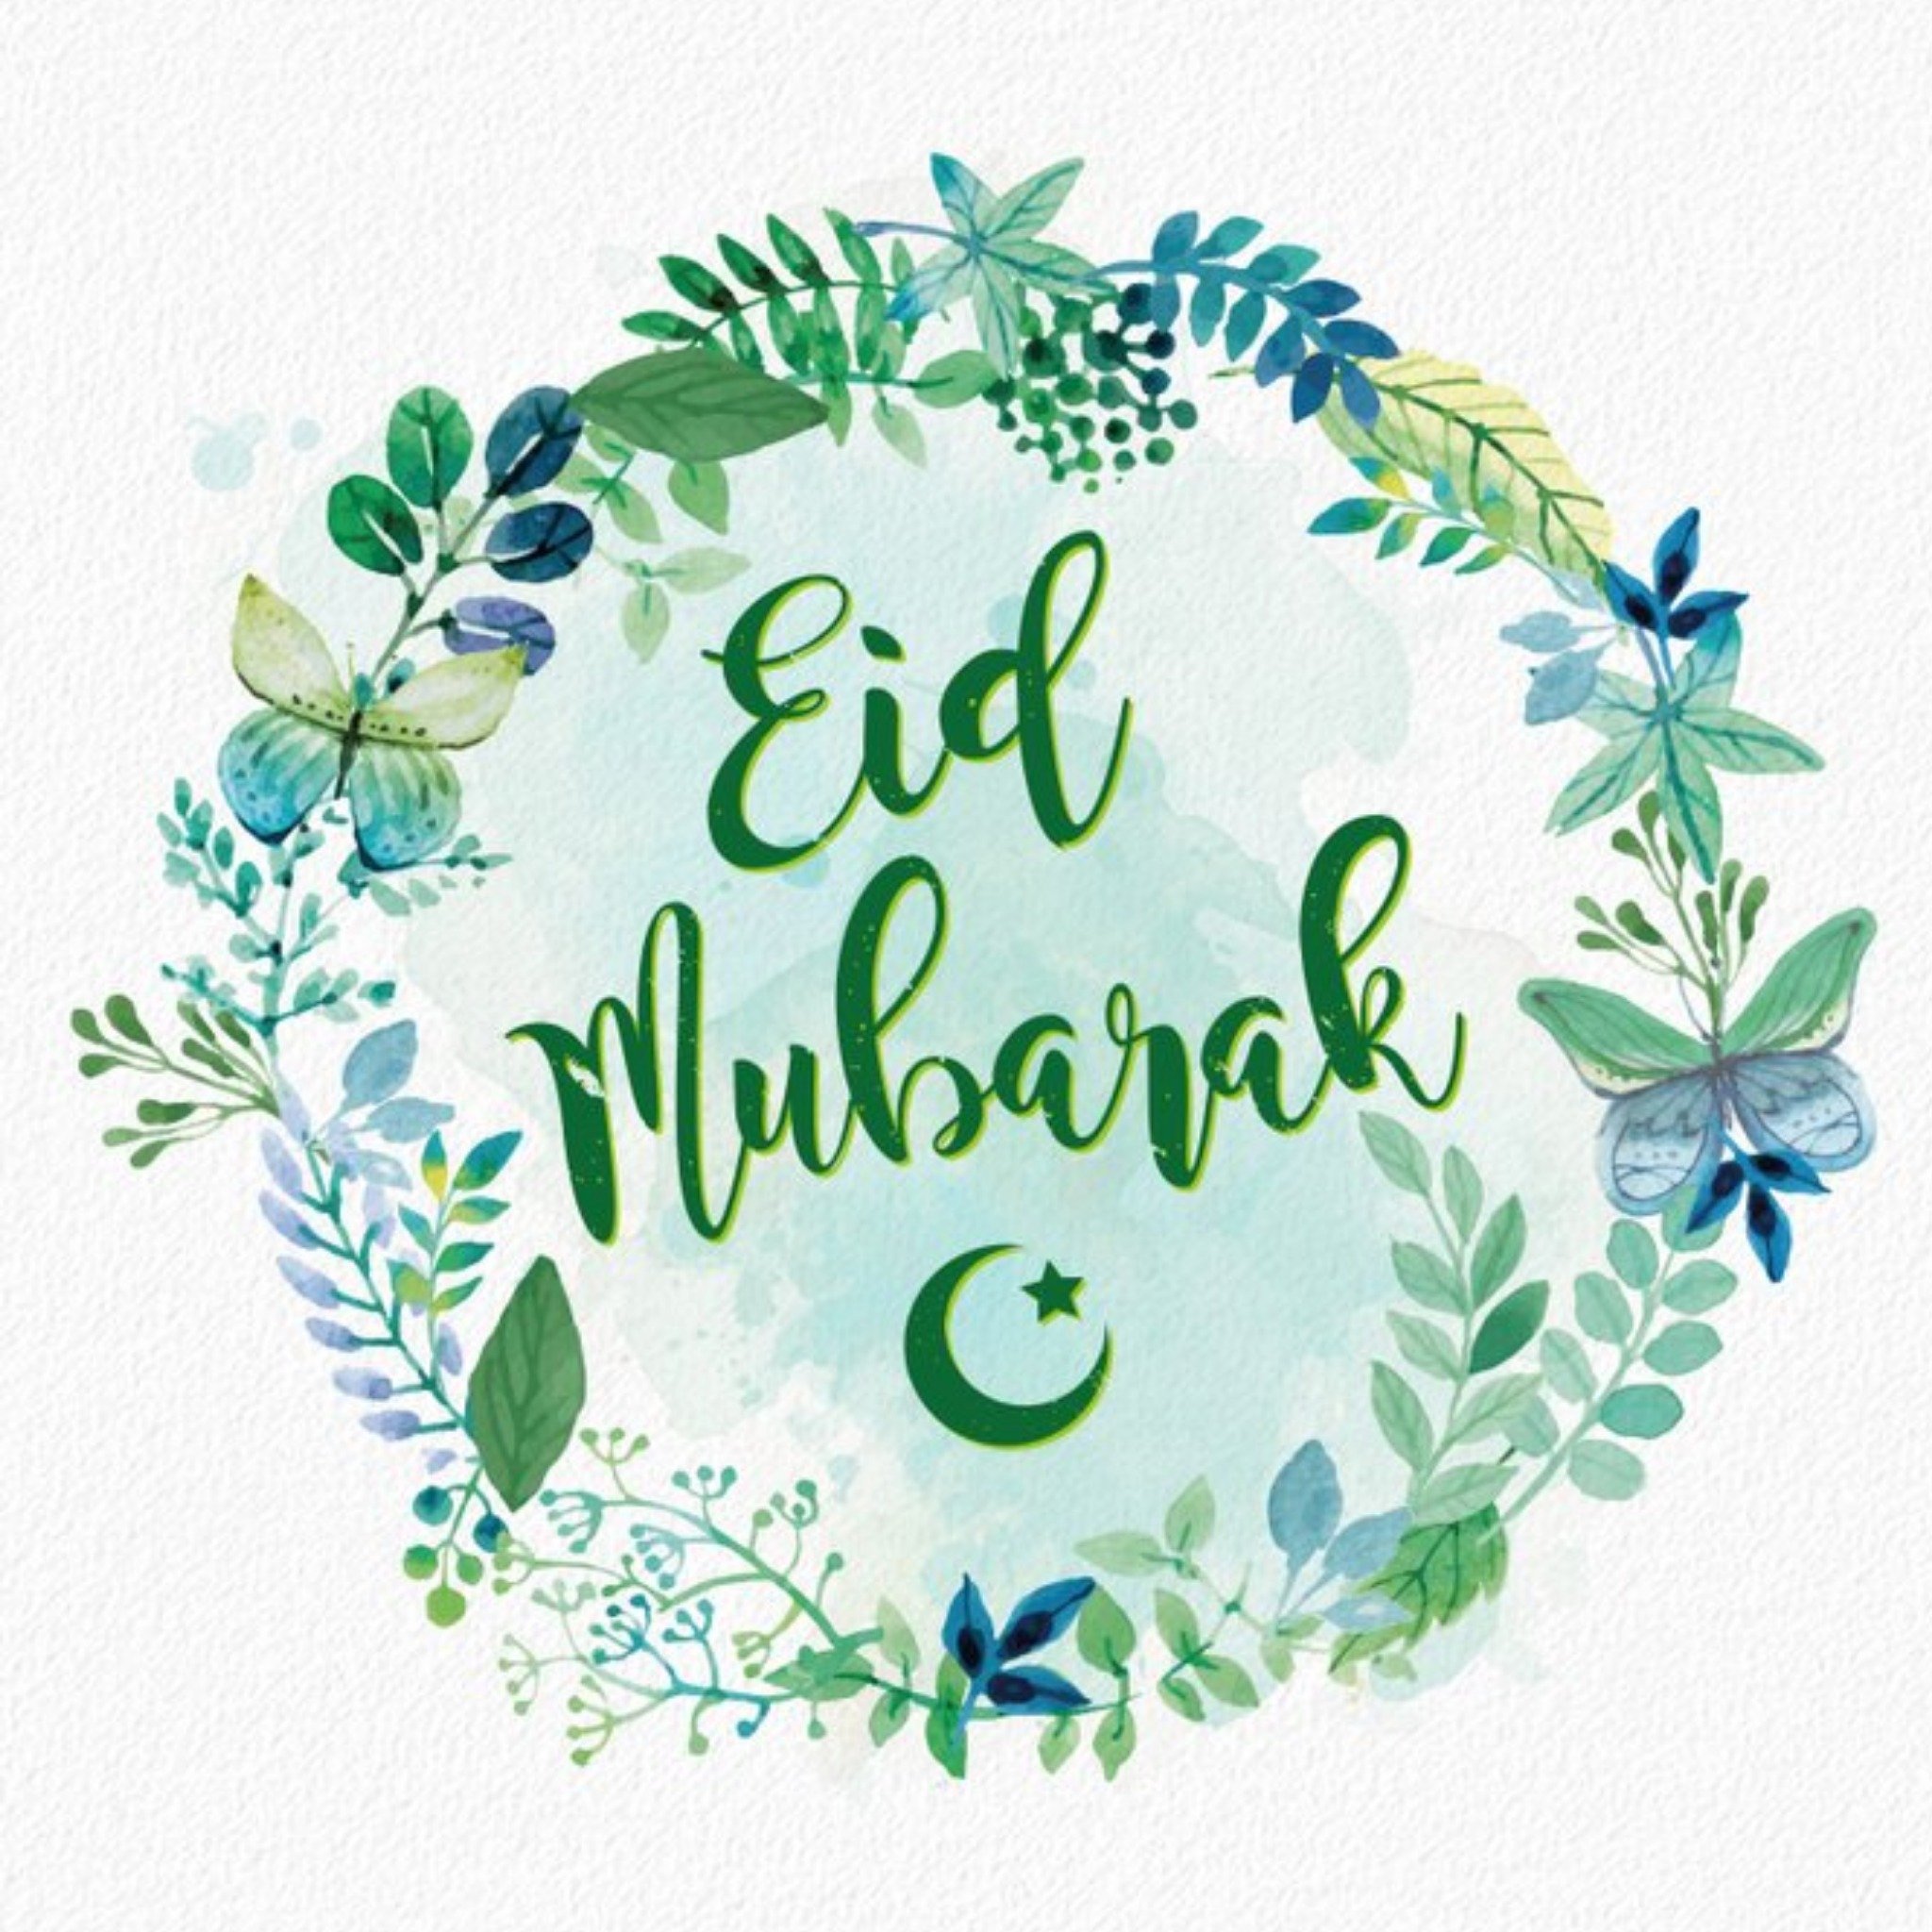 Moonpig Eid Mubarak Colourful Pretty Floral Card, Large